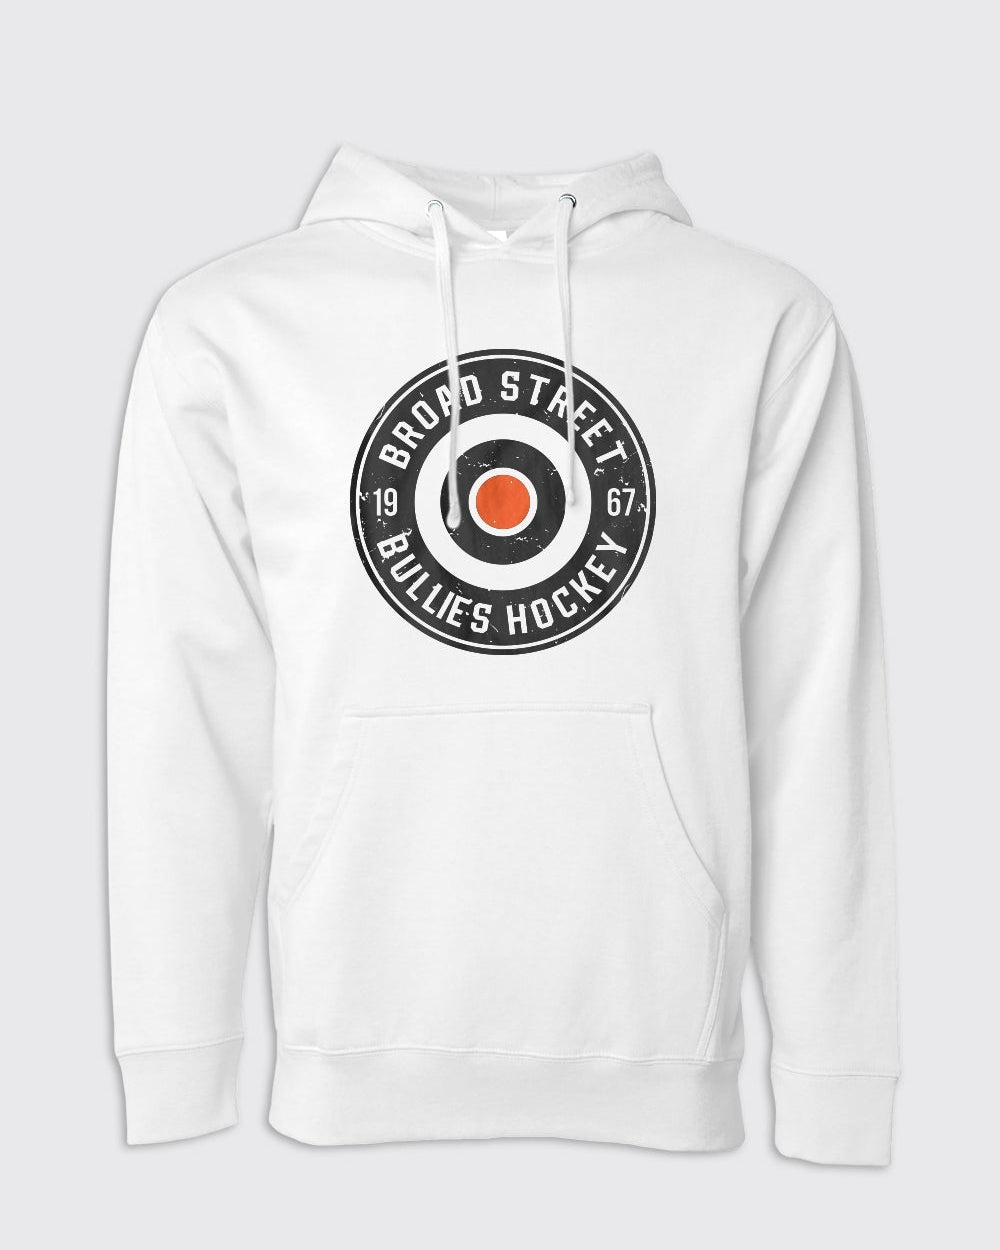 Broad Street Bullies Hockey Hoodie - Flyers, Hoodies - Philly Sports Shirts